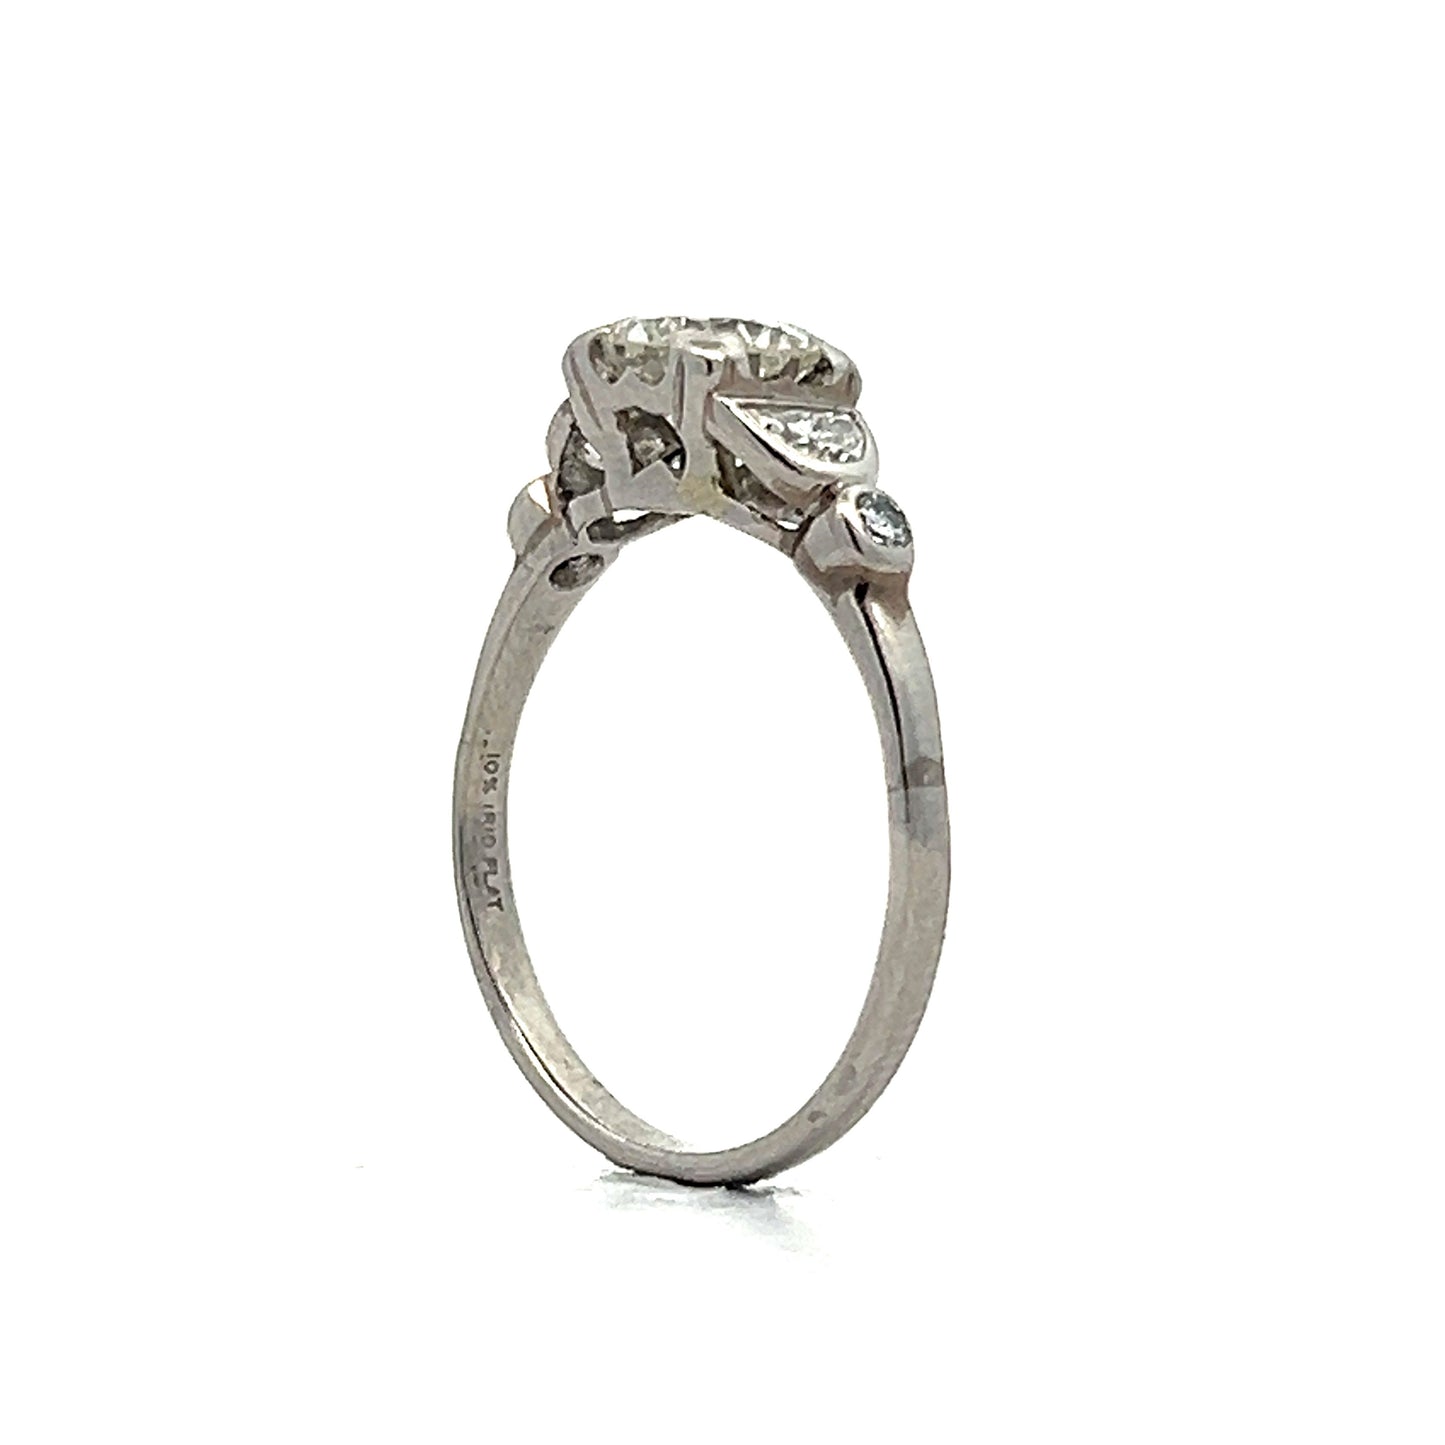 .85 Art Deco Transitional Diamond Engagement Ring in Platinum